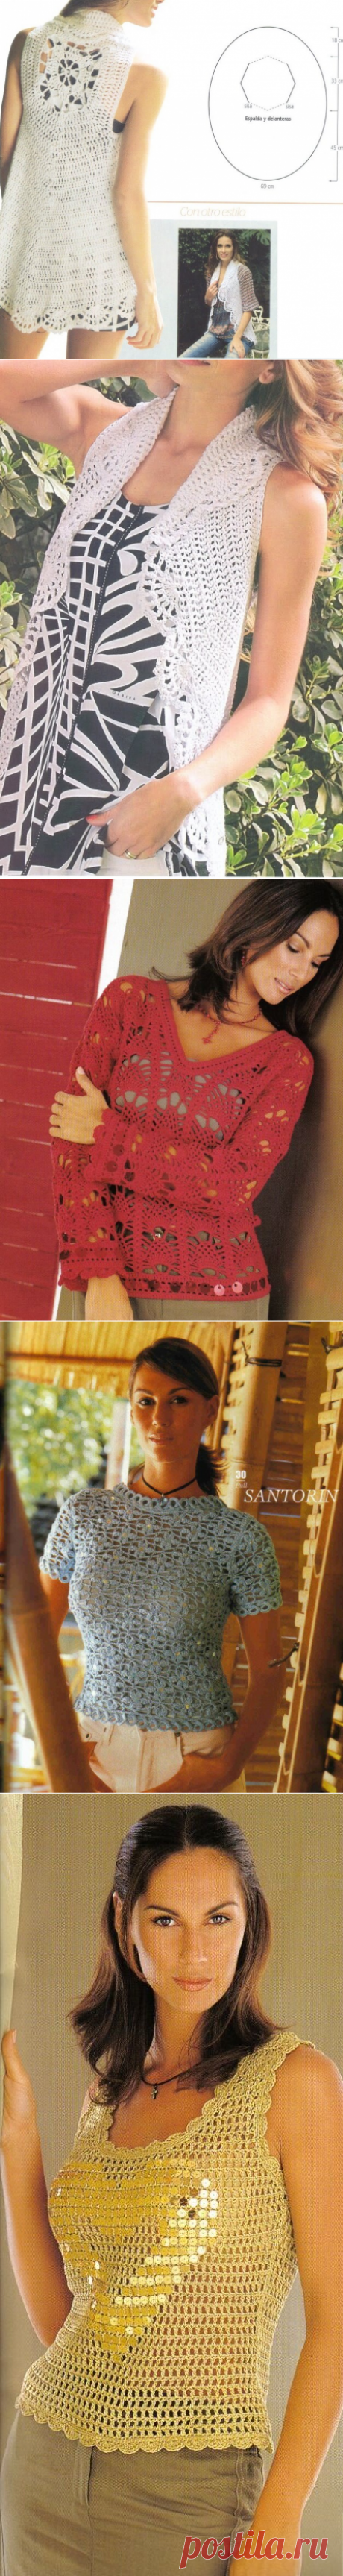 Подборка 15 летних моделей крючком для девушек, со схемами | Sana Lace Knit | Яндекс Дзен